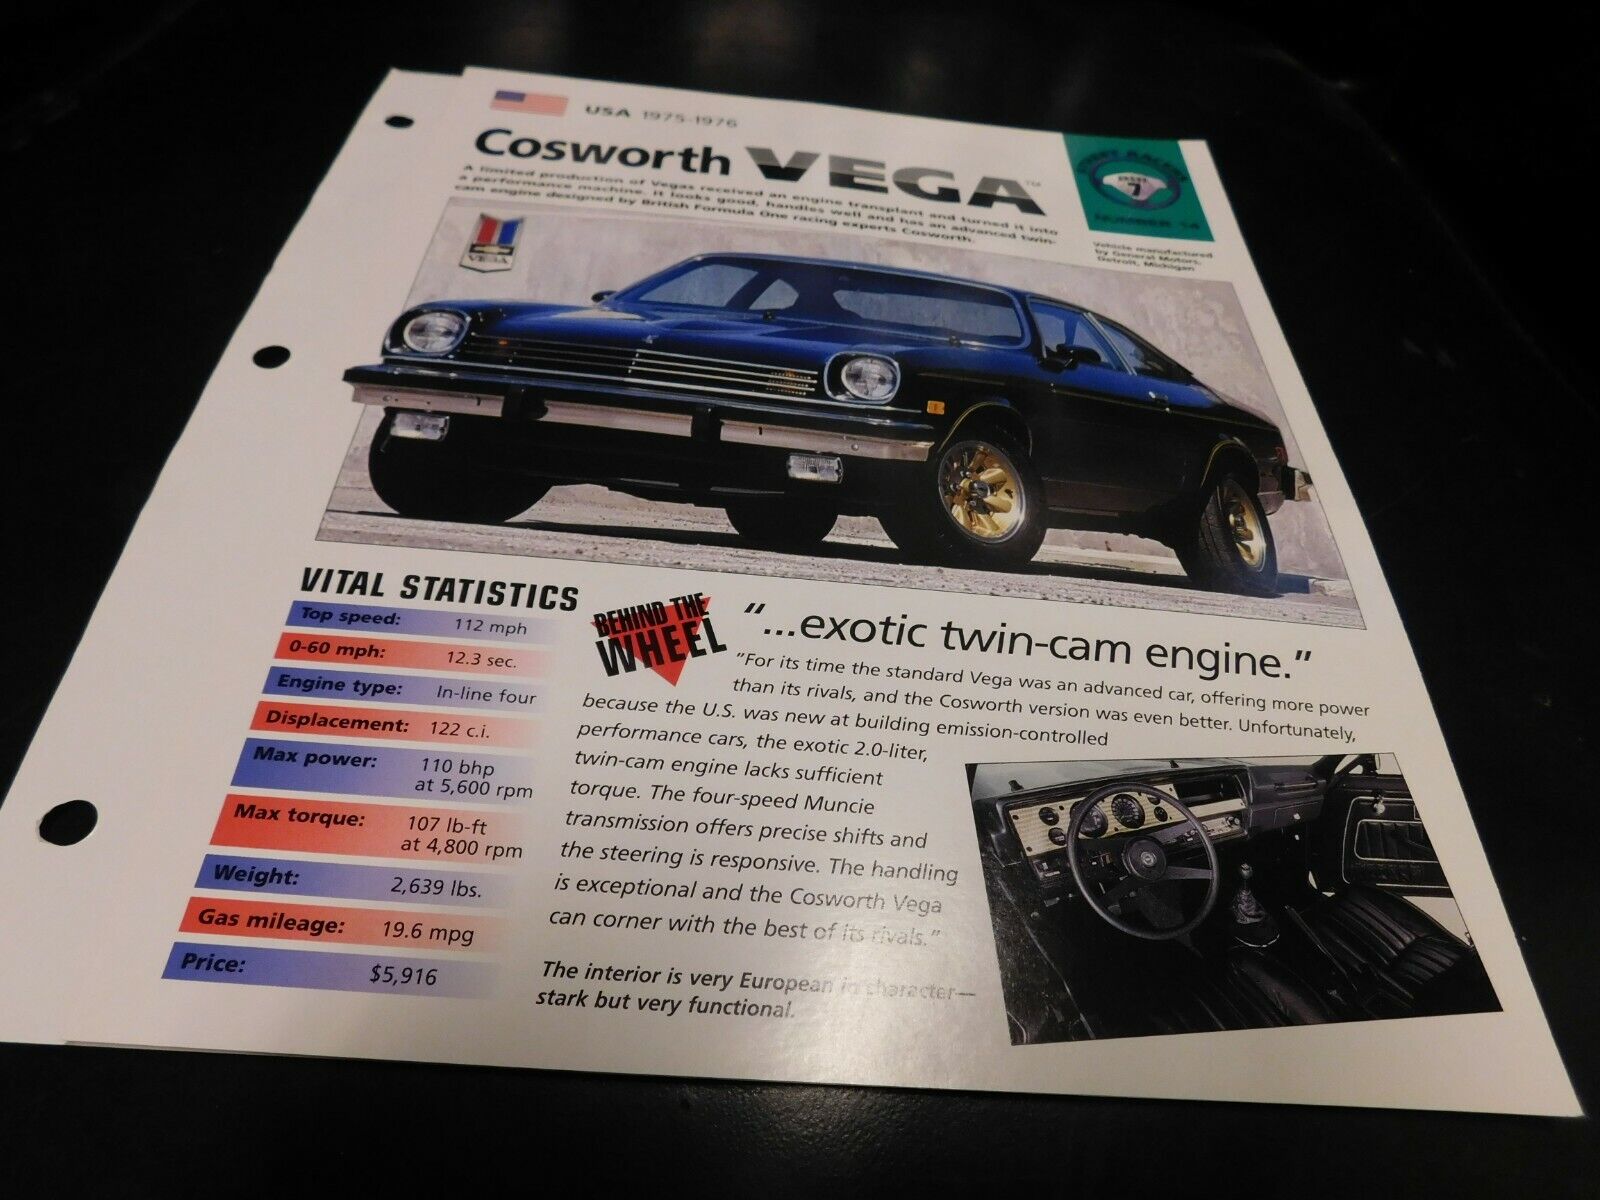 1975-1976 Chevrolet Cosworth Vega Spec Sheet Brochure Photo Poster